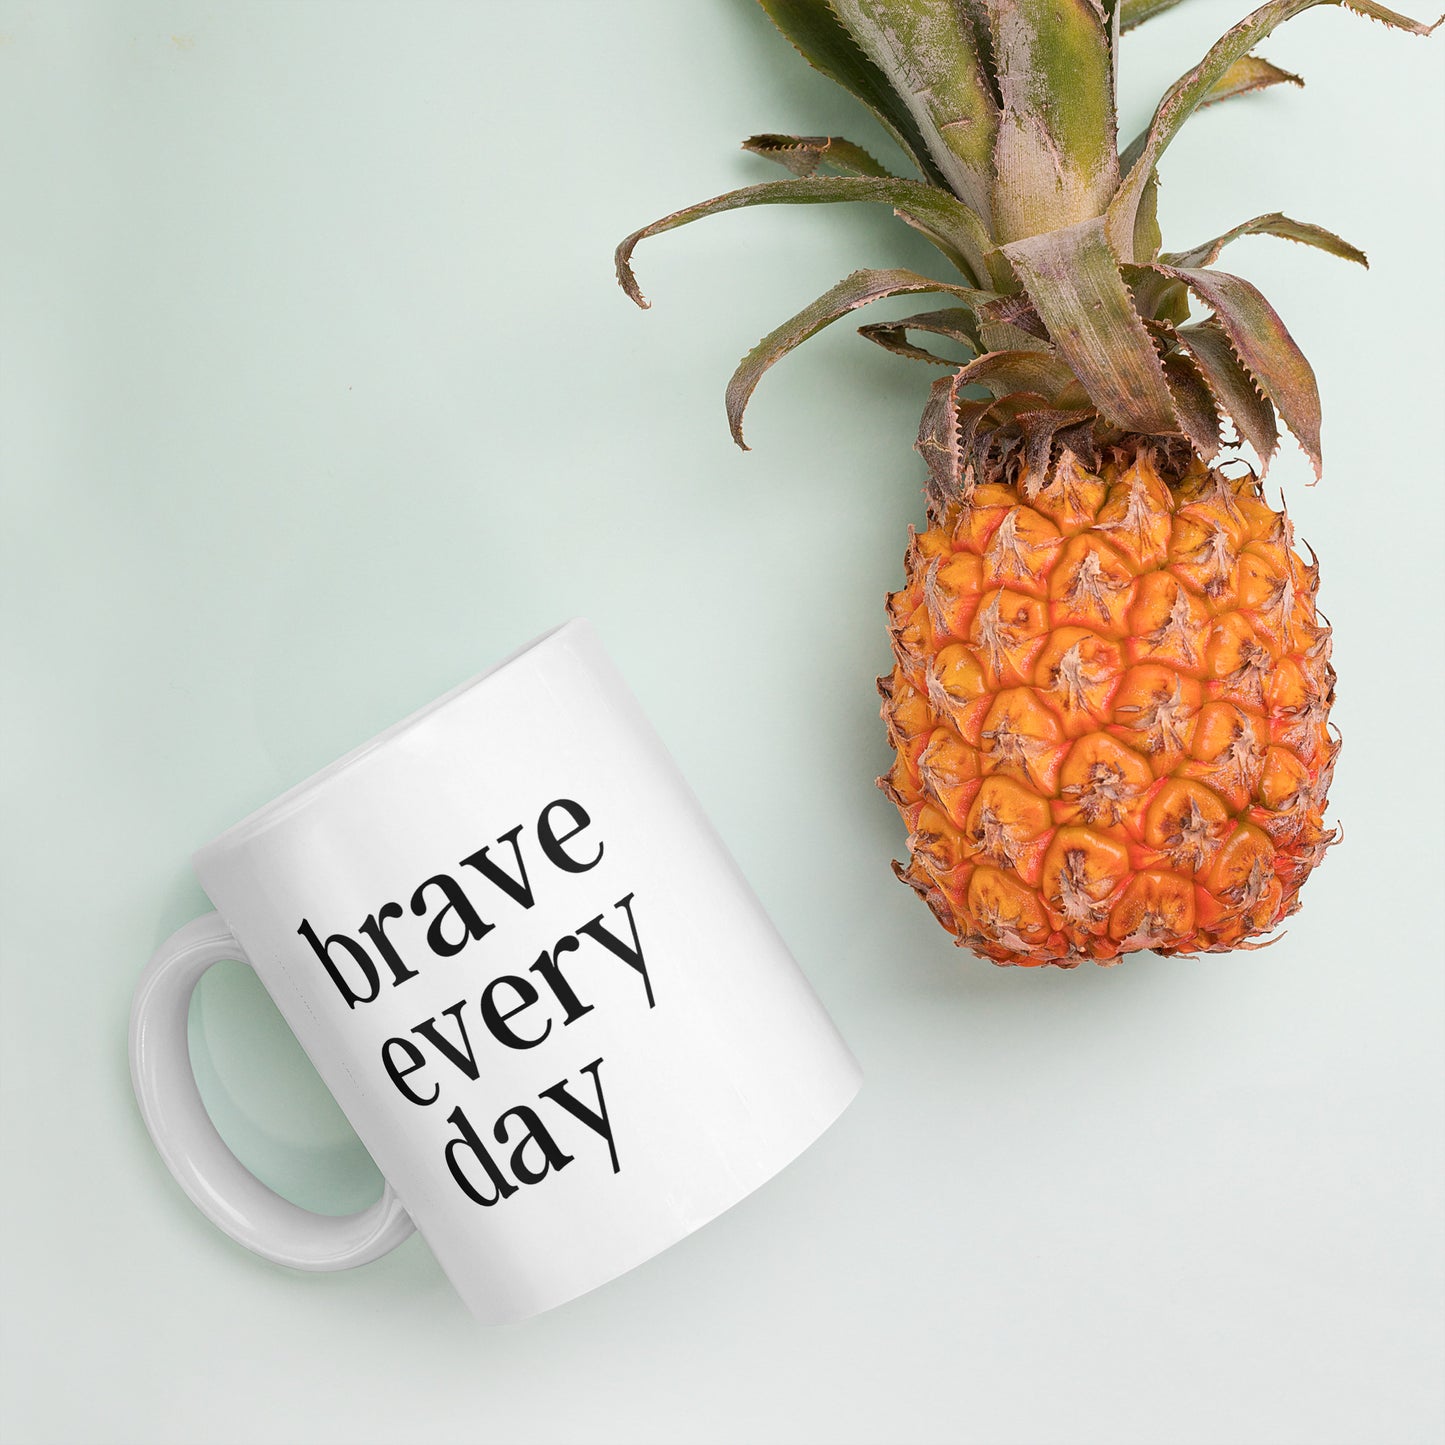 Brave Every Day Mug